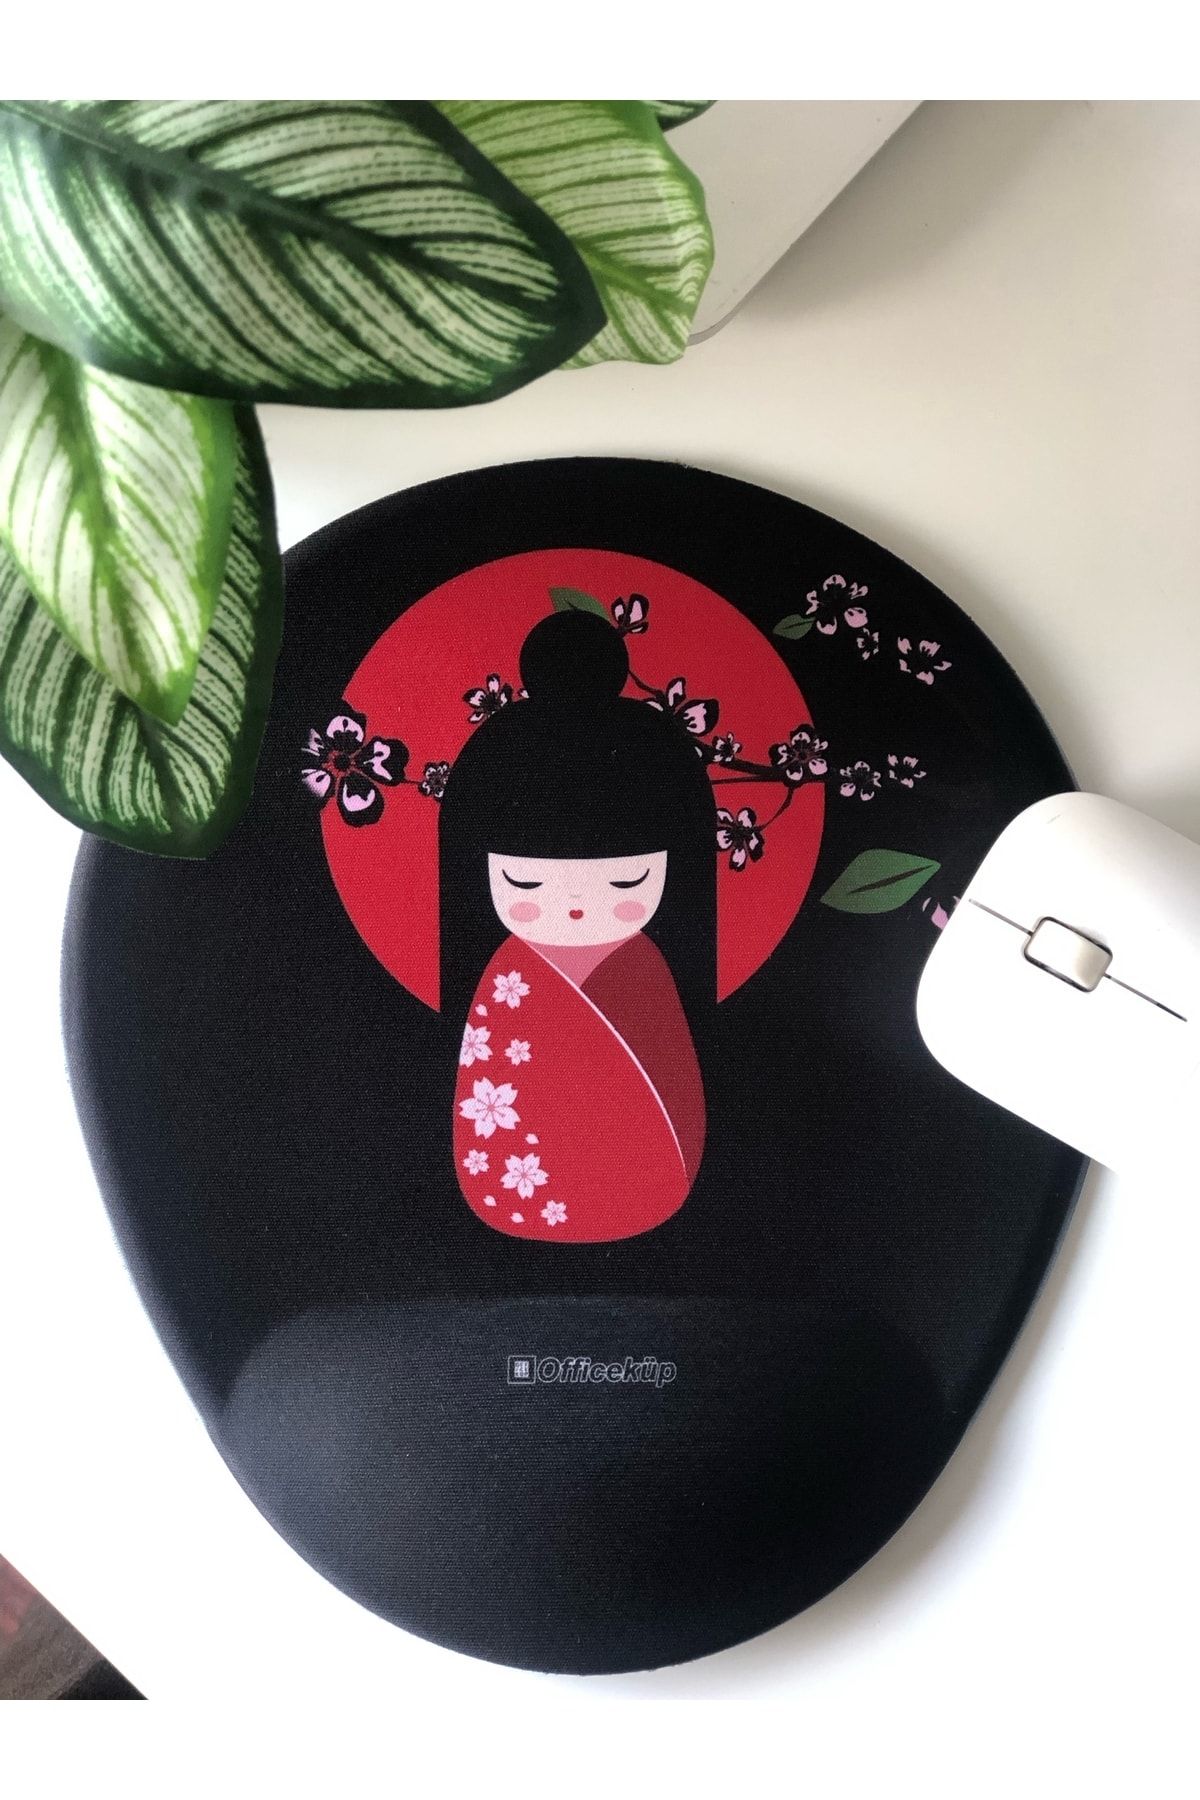 Officeküp Geisha Bilek Destekli Mouse Pad